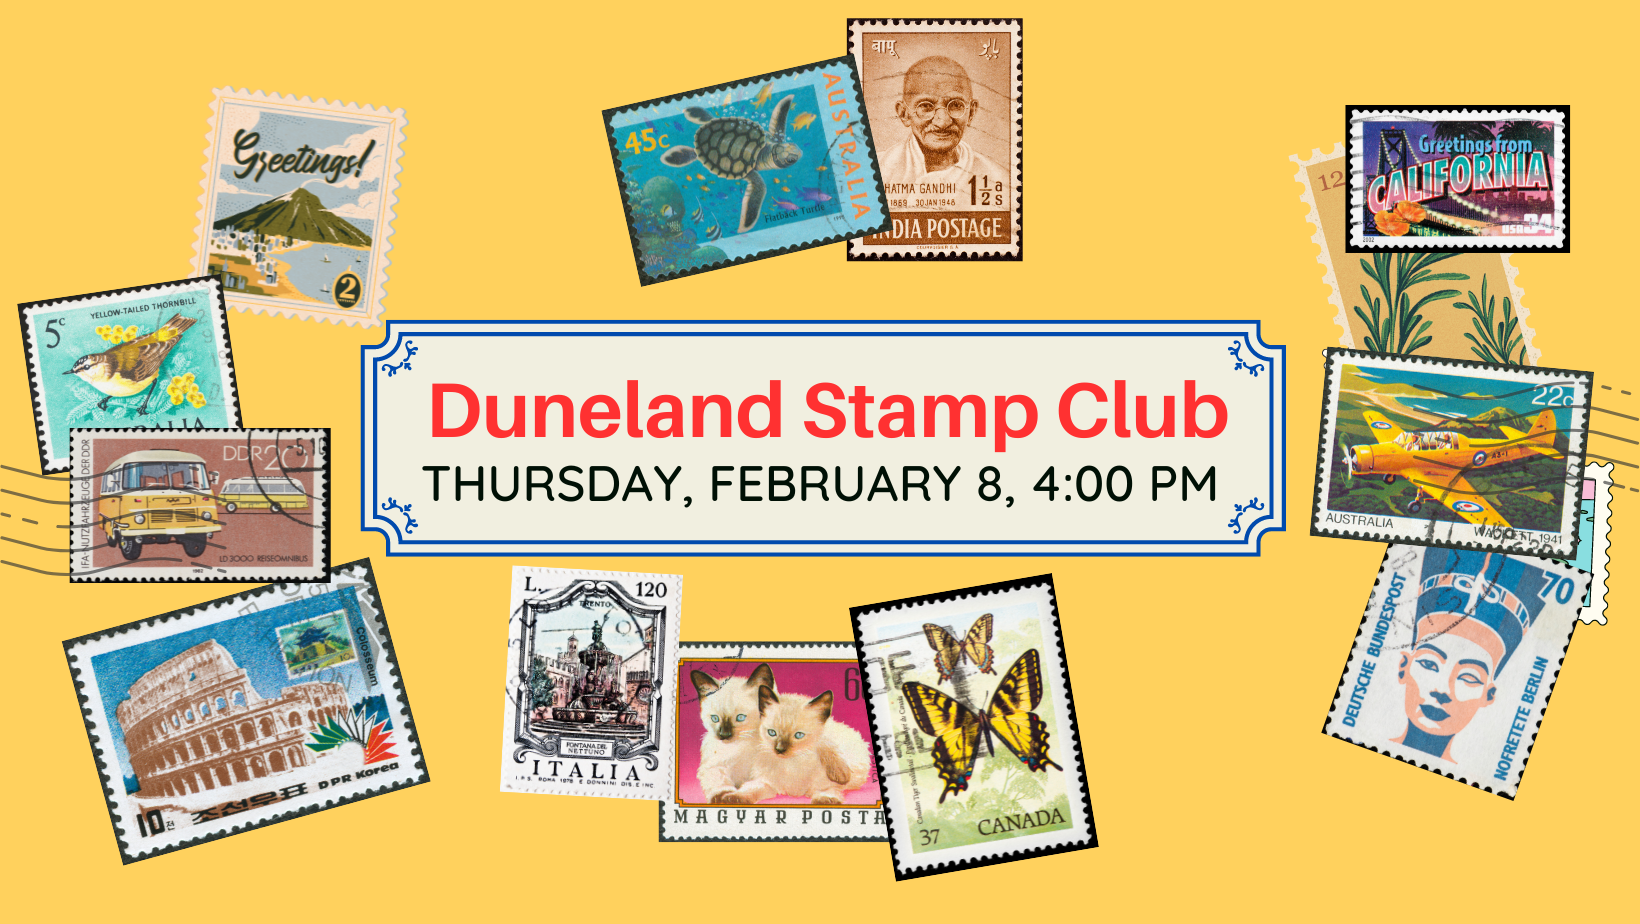 Duneland Stamp Club, Thursday, February 8, 4:00 pm